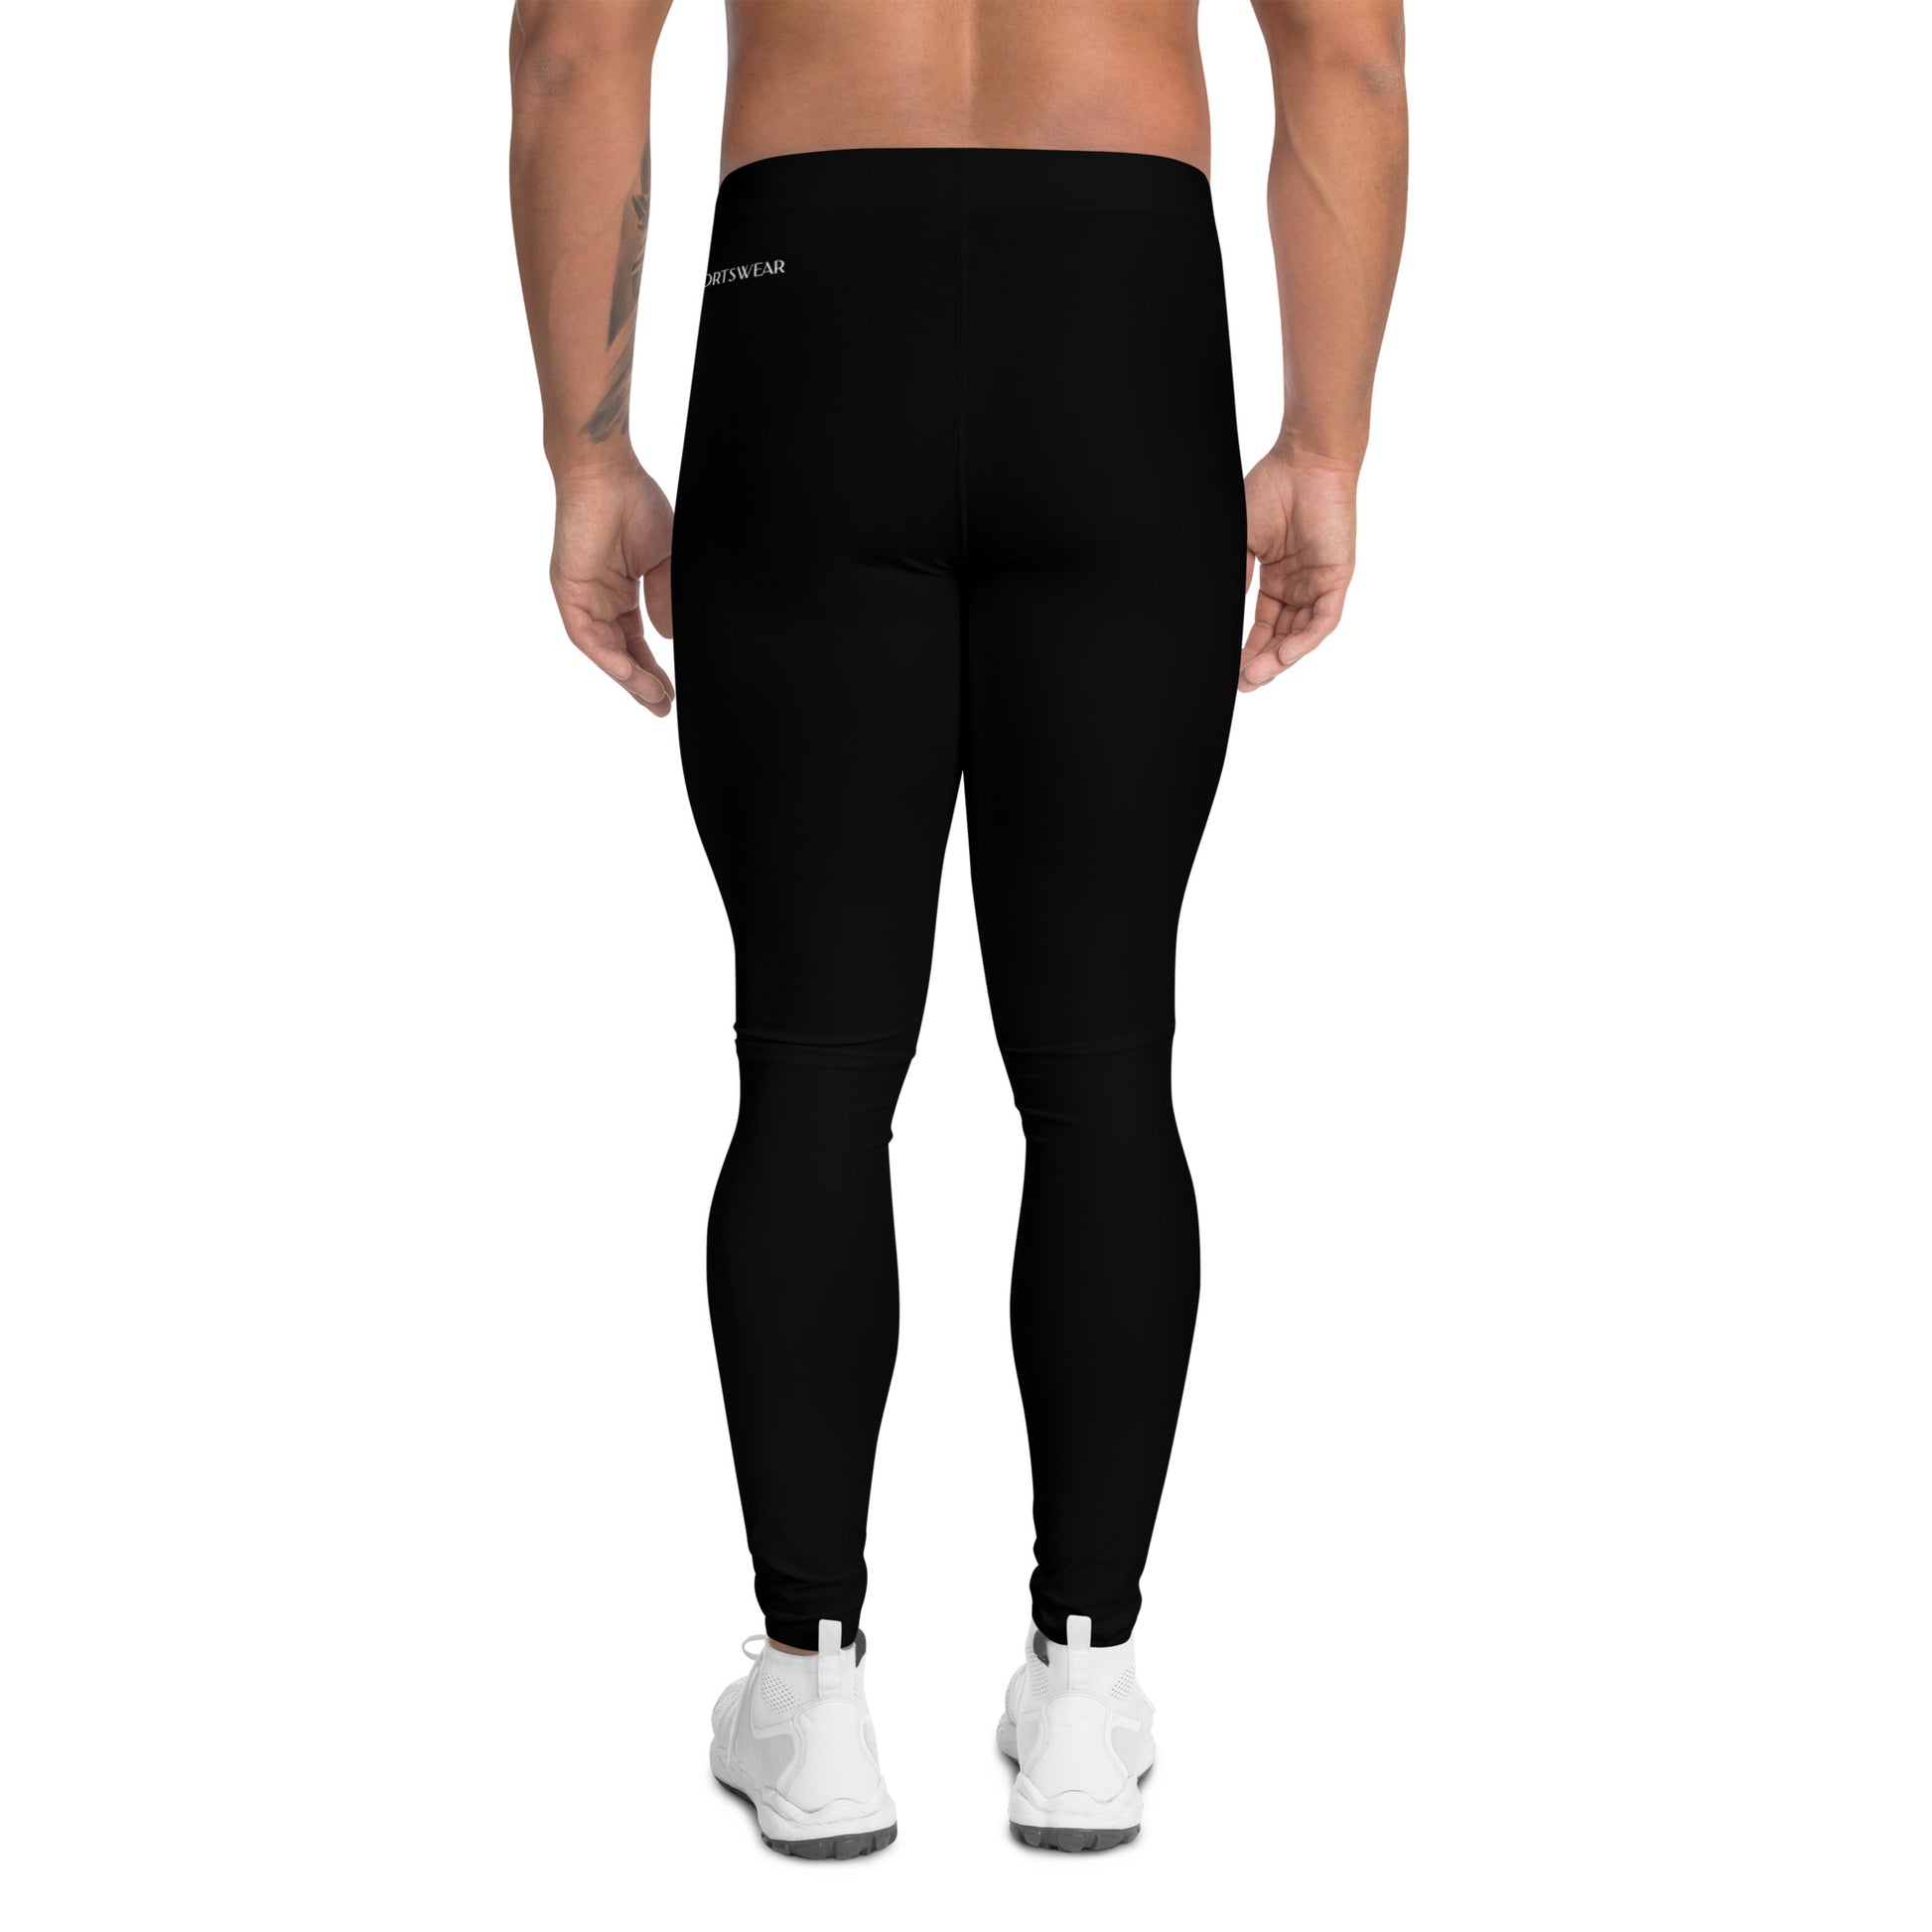 Humble Sportswear, men's leggings, active performance leggings, compression leggings for men, Color Match leggings 